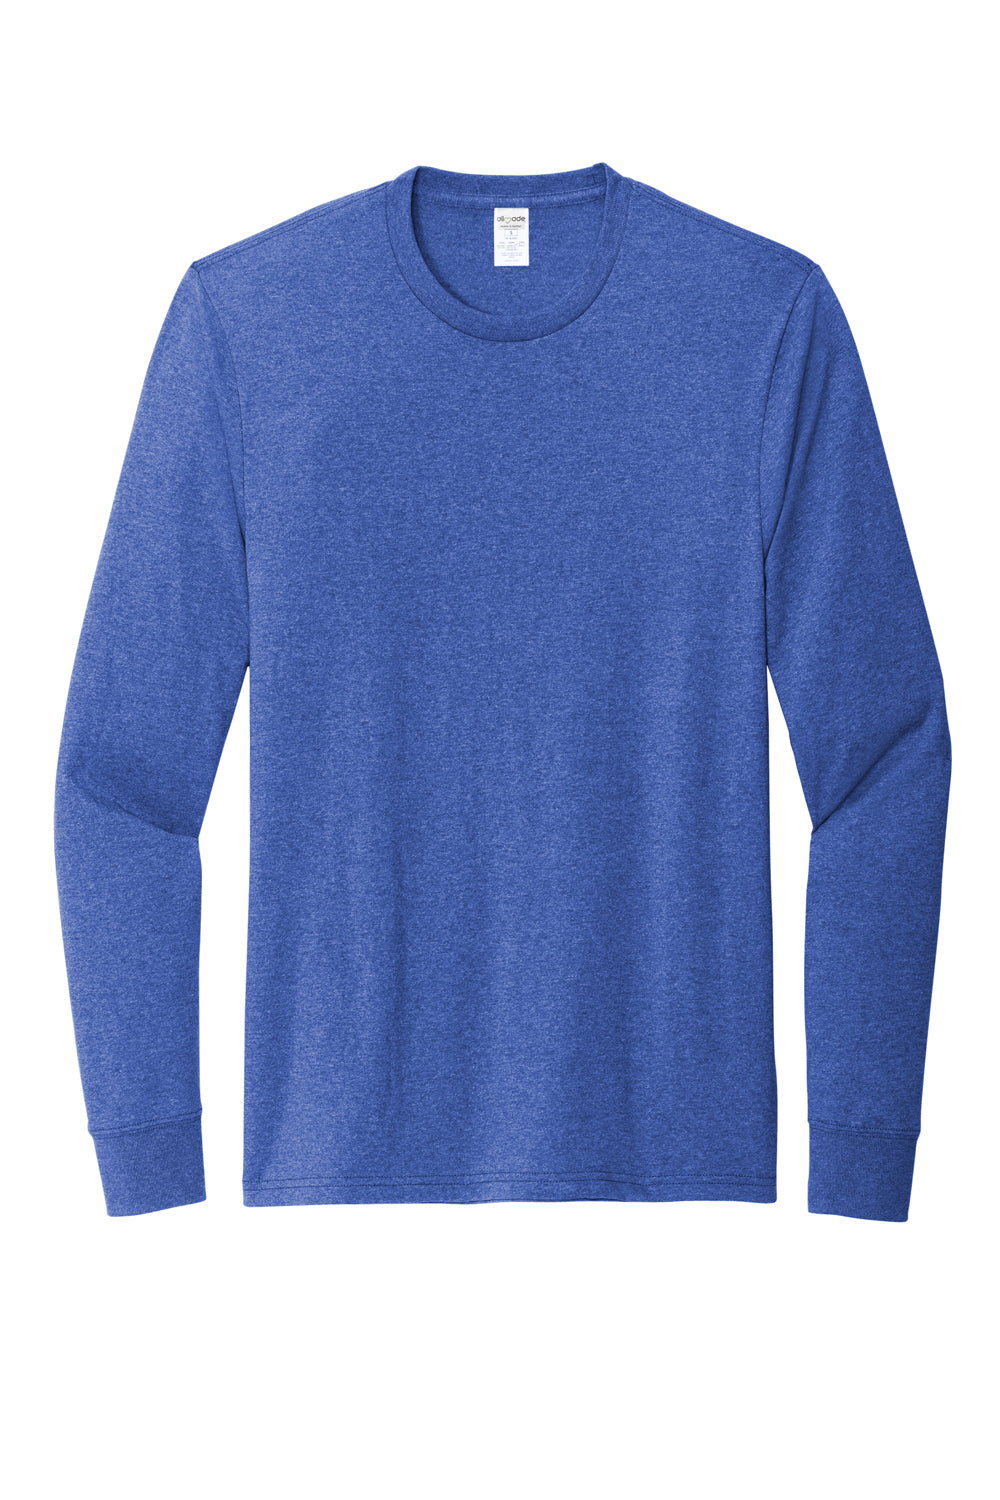 Allmade AL6204 Mens Recycled Long Sleeve Crewneck T-Shirt Heather Royal Blue Flat Front